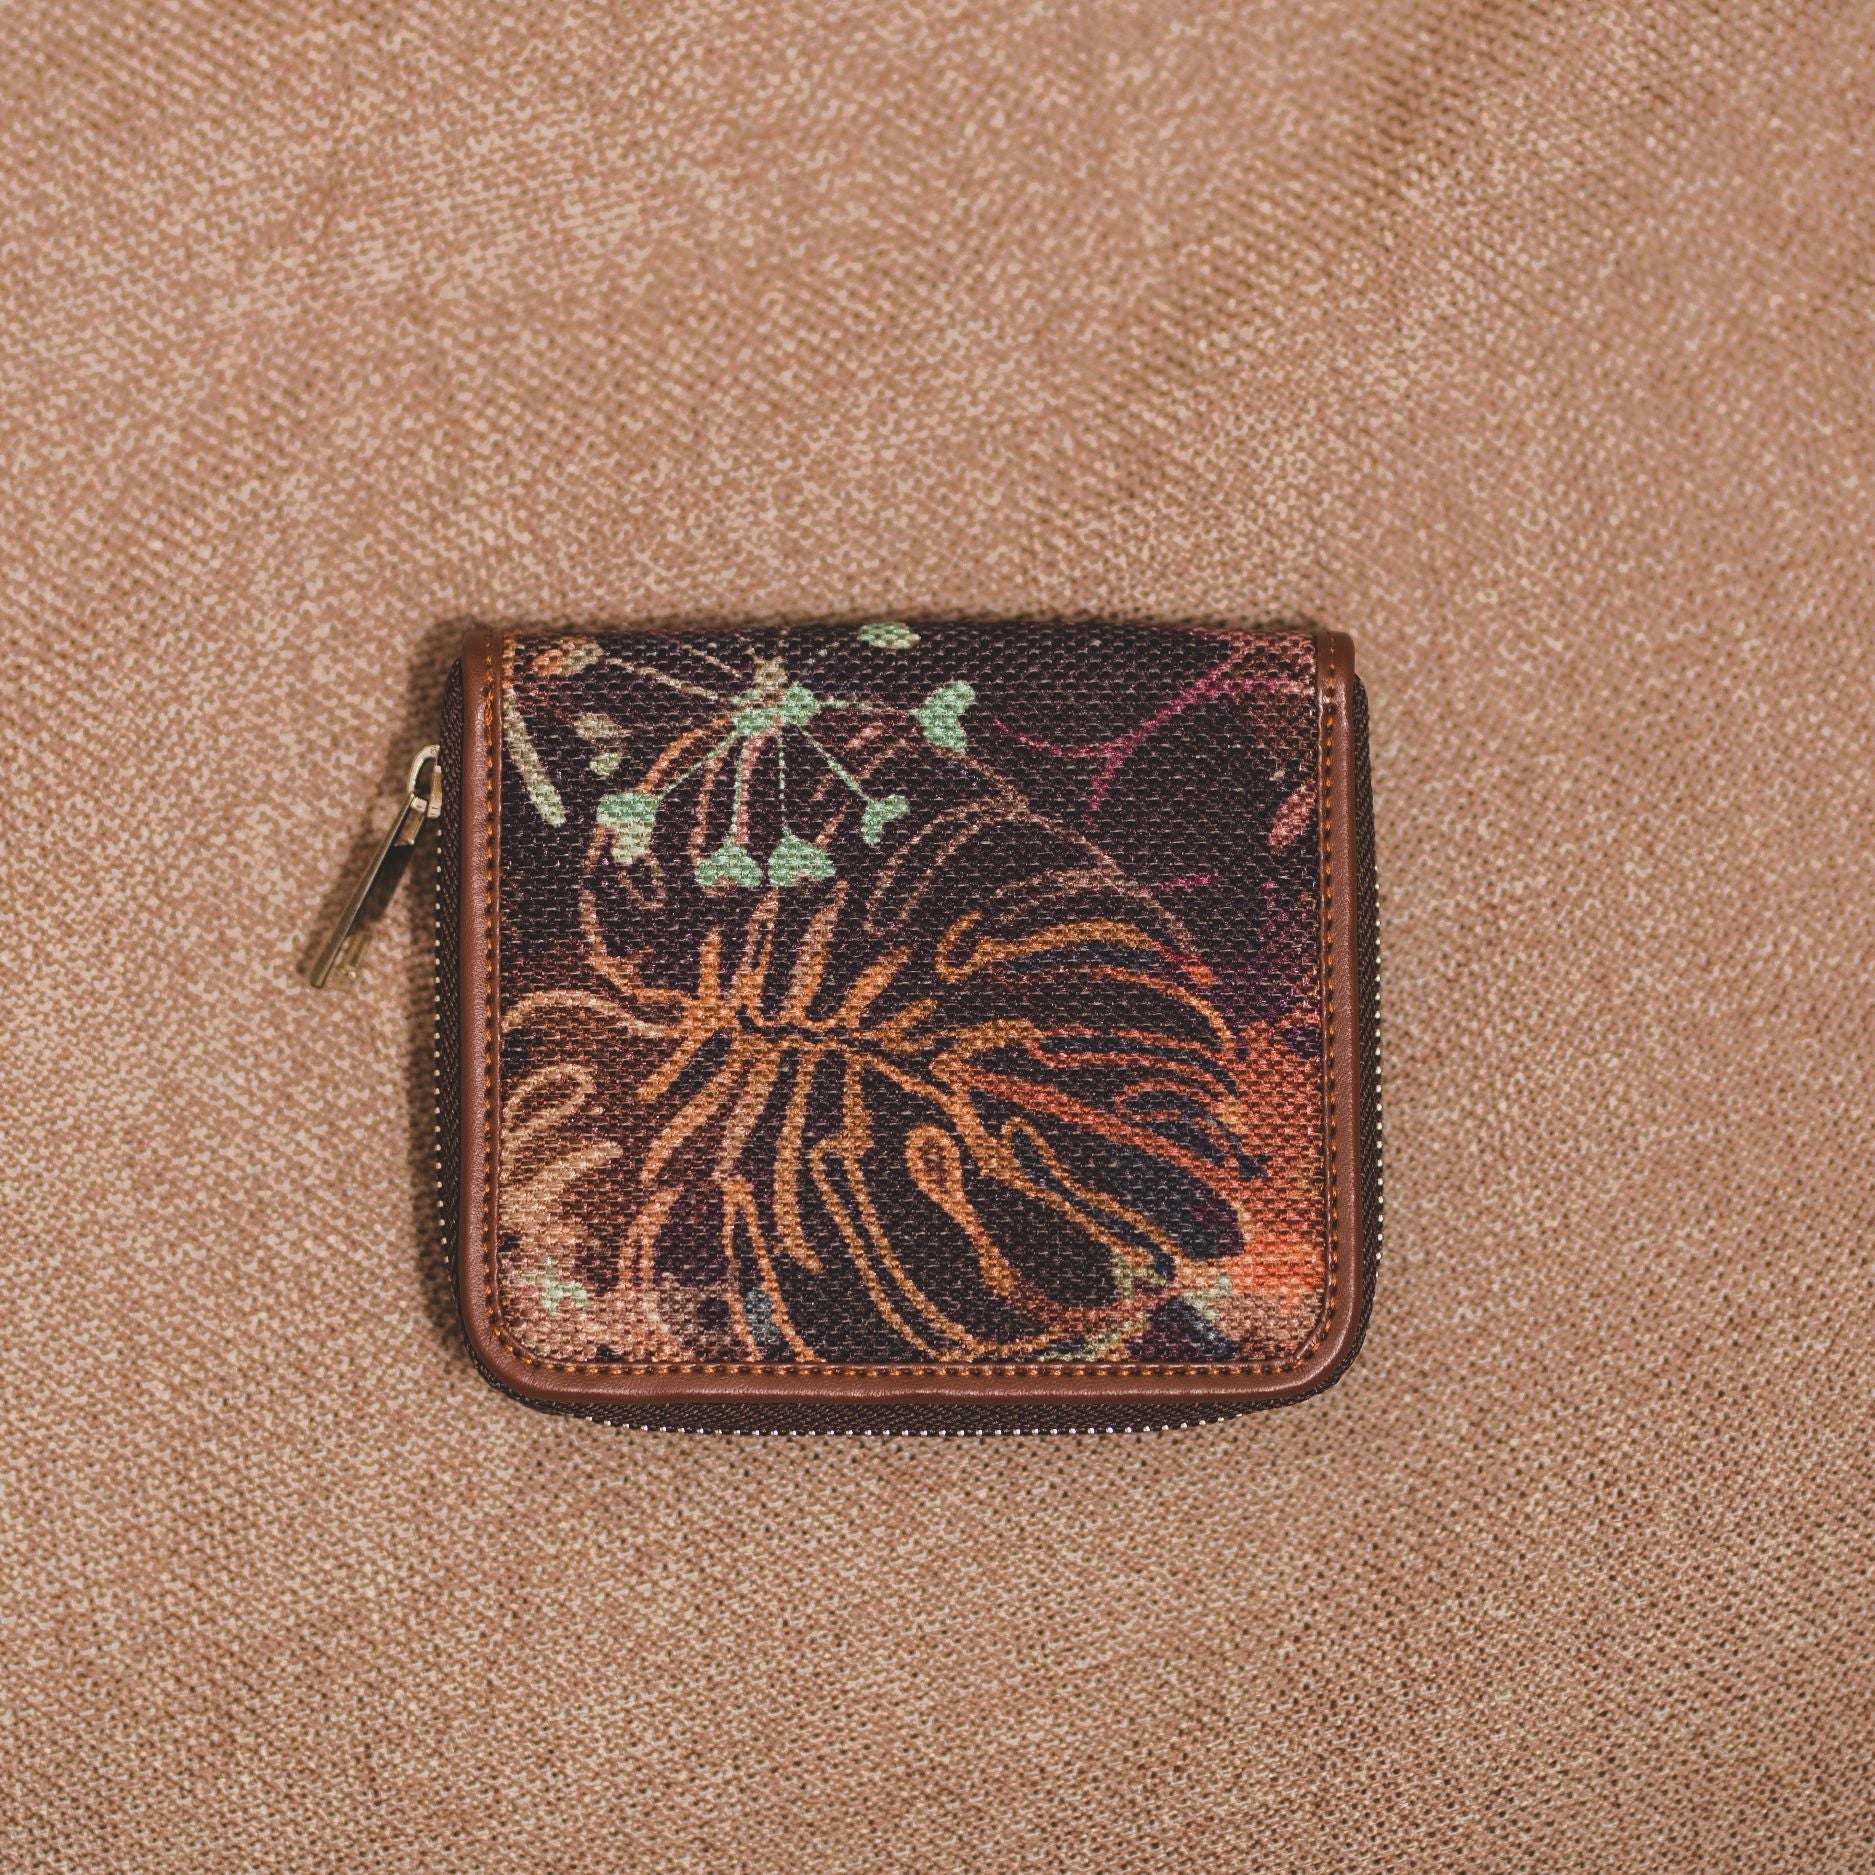 FloLov Women's Mini Wallet